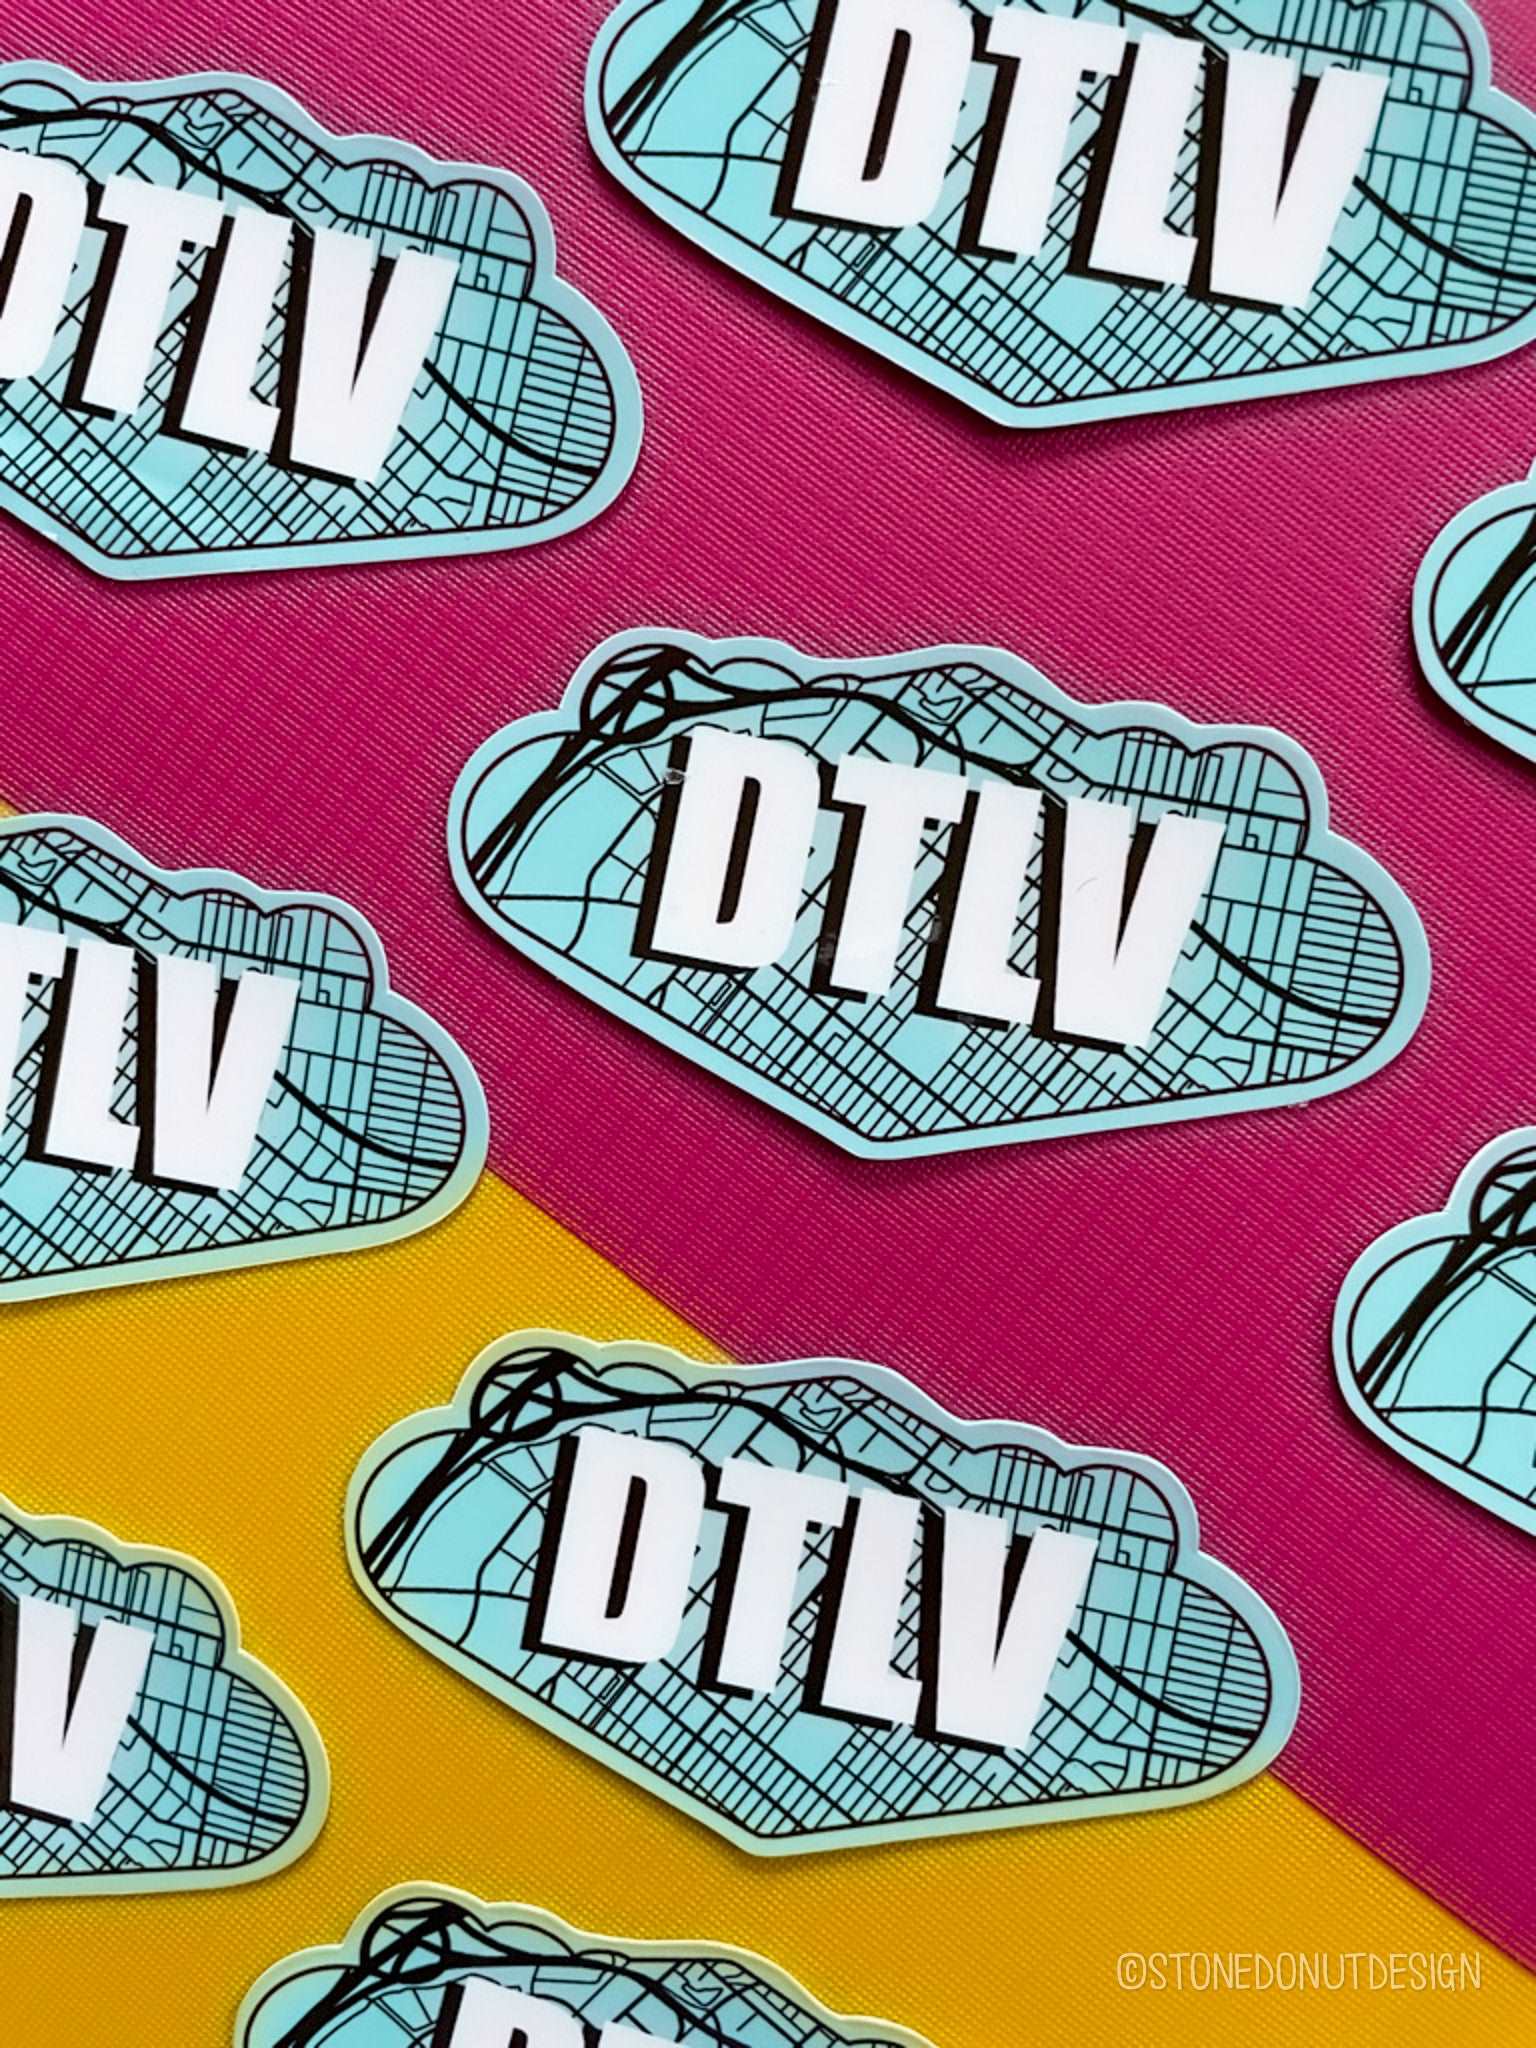 DTLV Map (Downtown Las Vegas) Vinyl Sticker